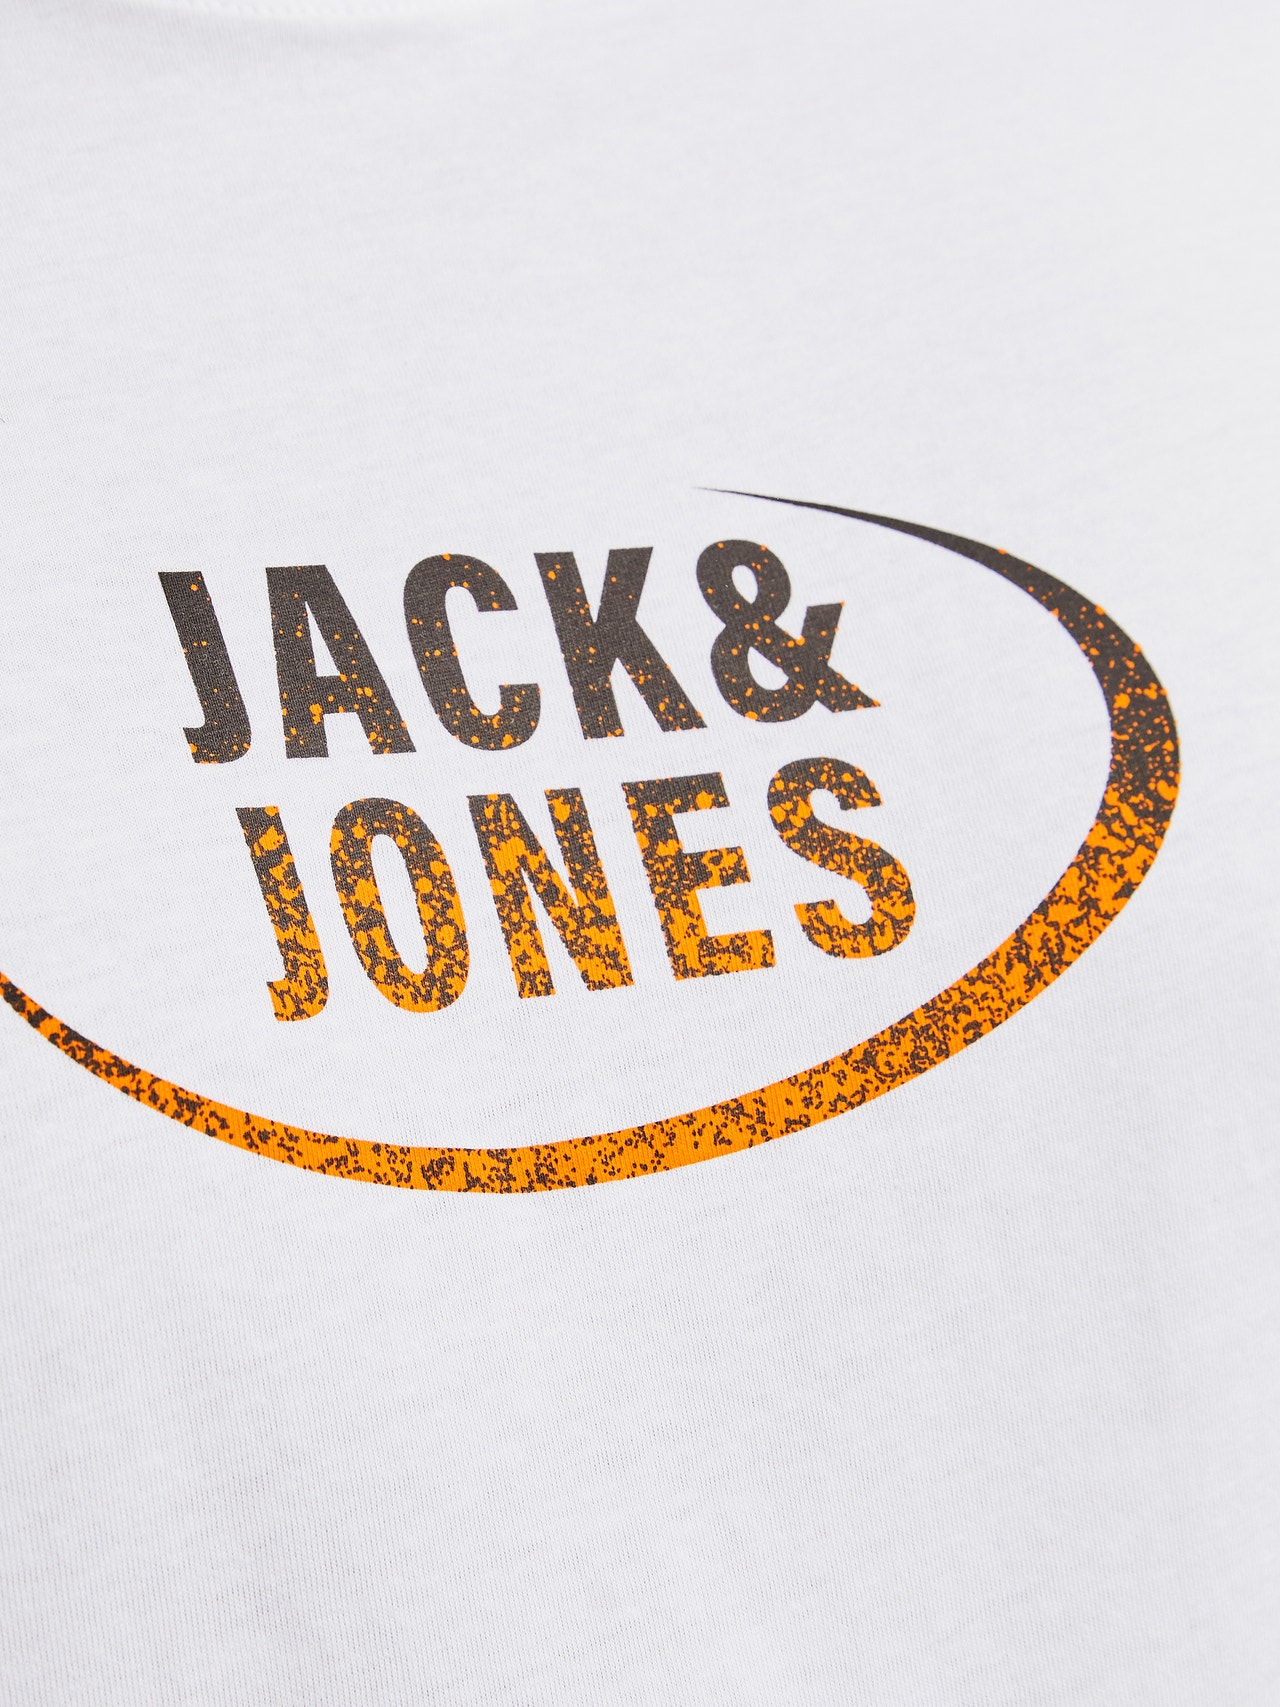 Jack & Jones Plus Size Logo T-paita -Bright White - 12270142